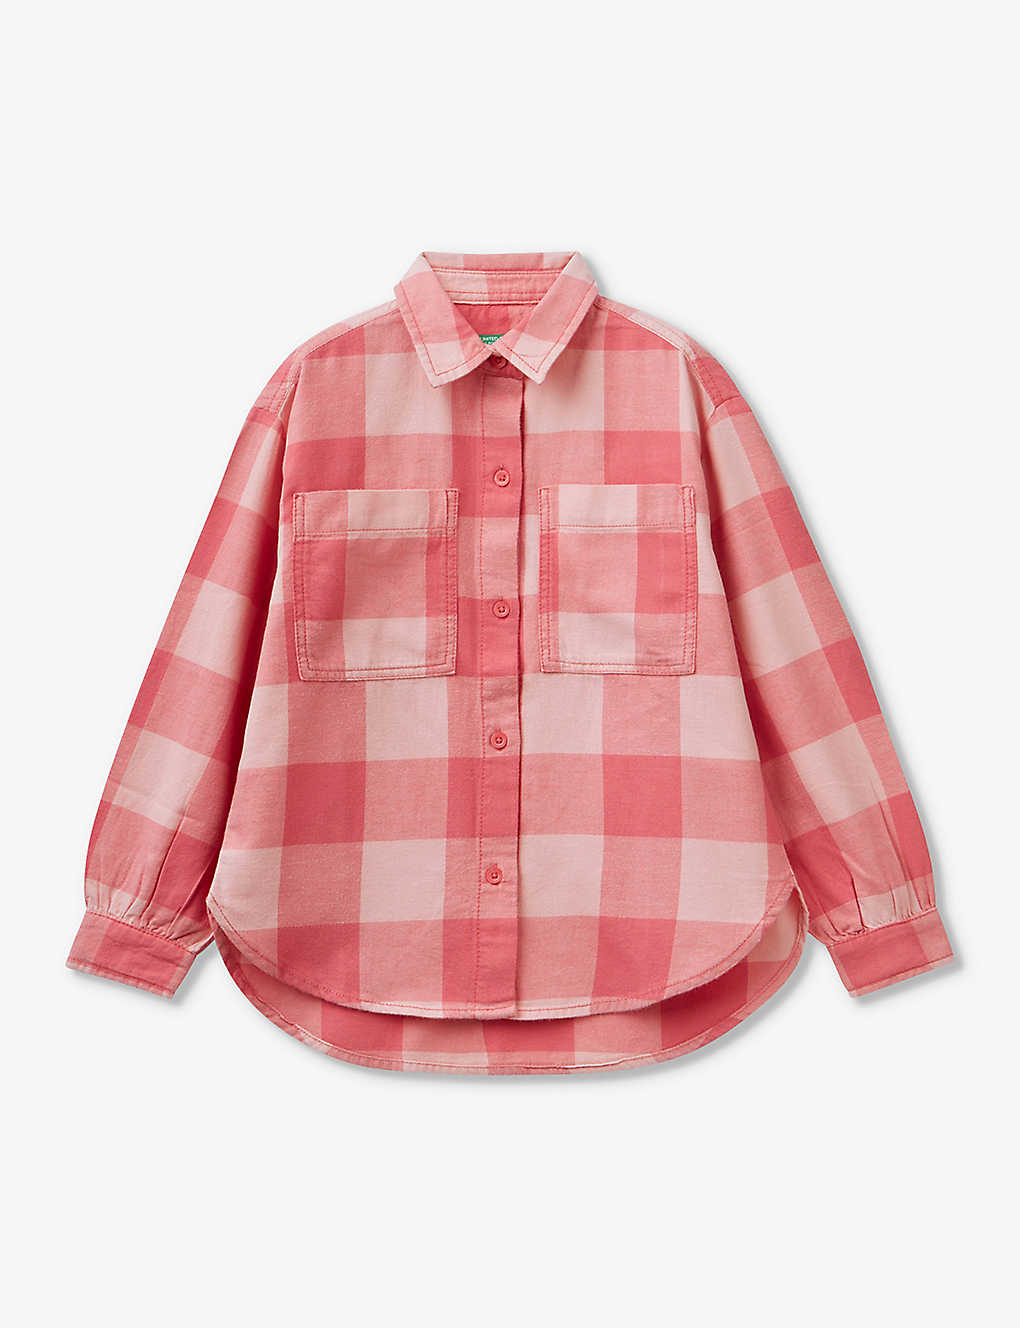 Benetton Boys Pink Check Kids Check-pattern Long-sleeve Cotton Shirt 6-14 Years